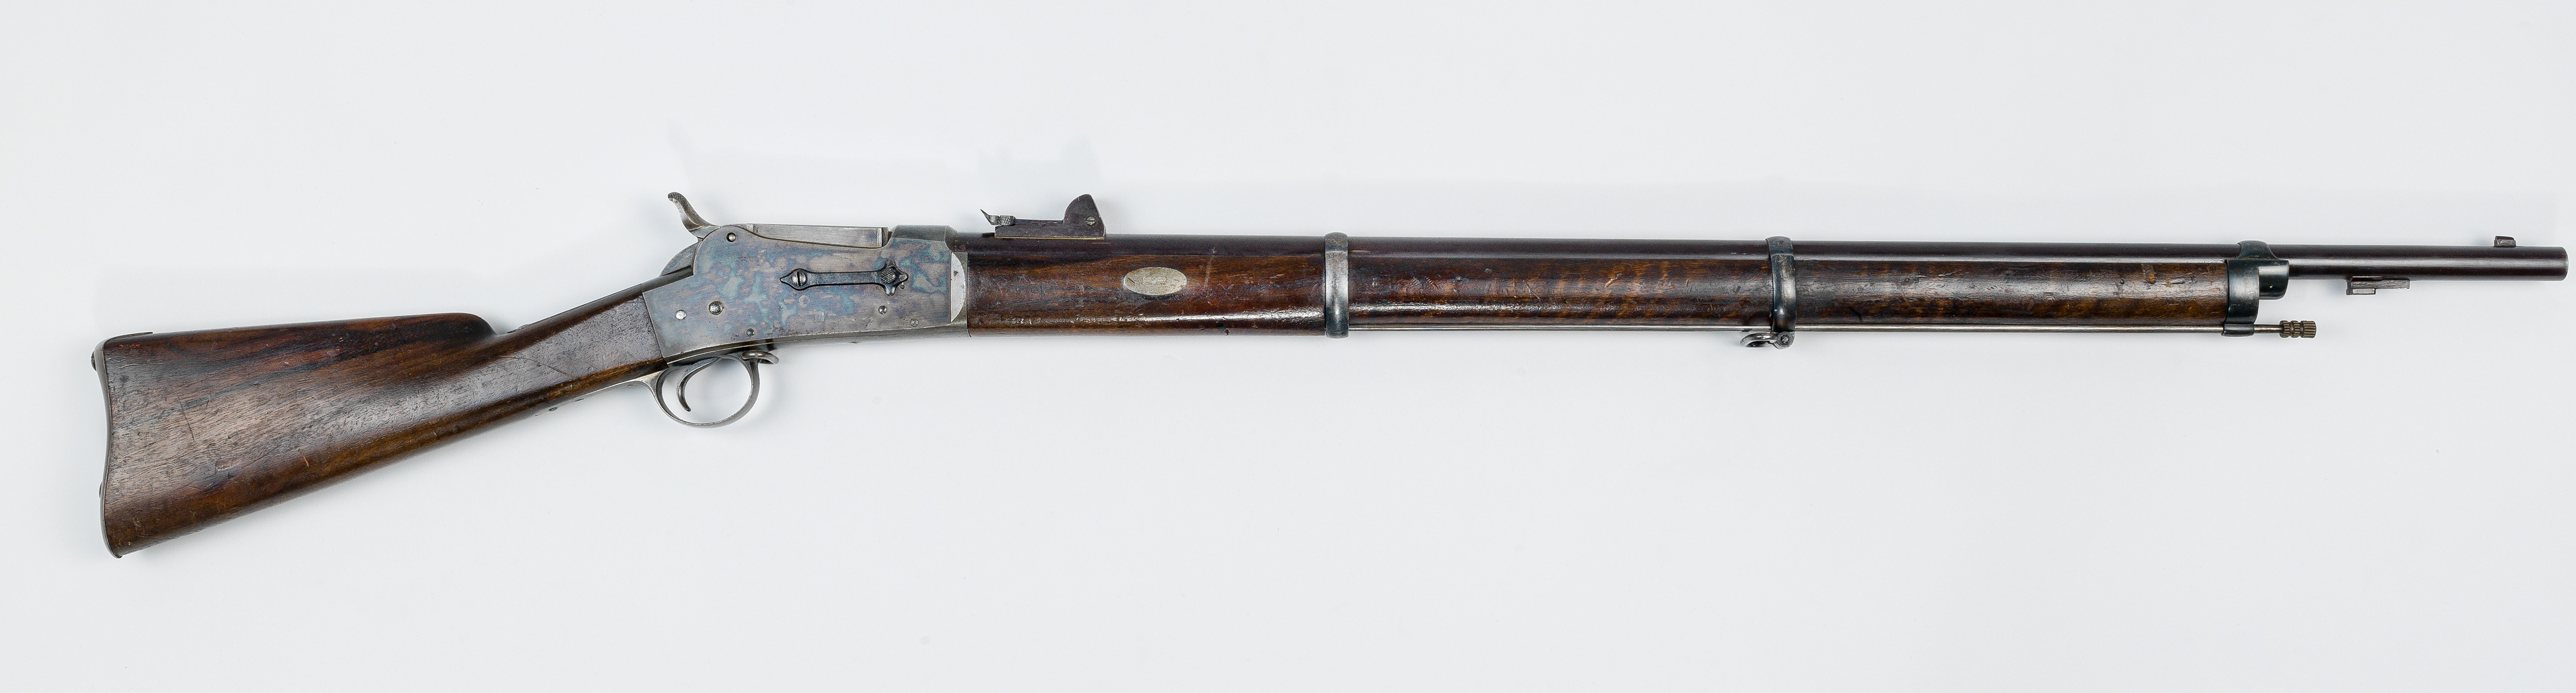 ./guns/rifle/bilder/Rifle-Kongsberg-Krag-Petersson-Prove-1873-1874-1.jpg